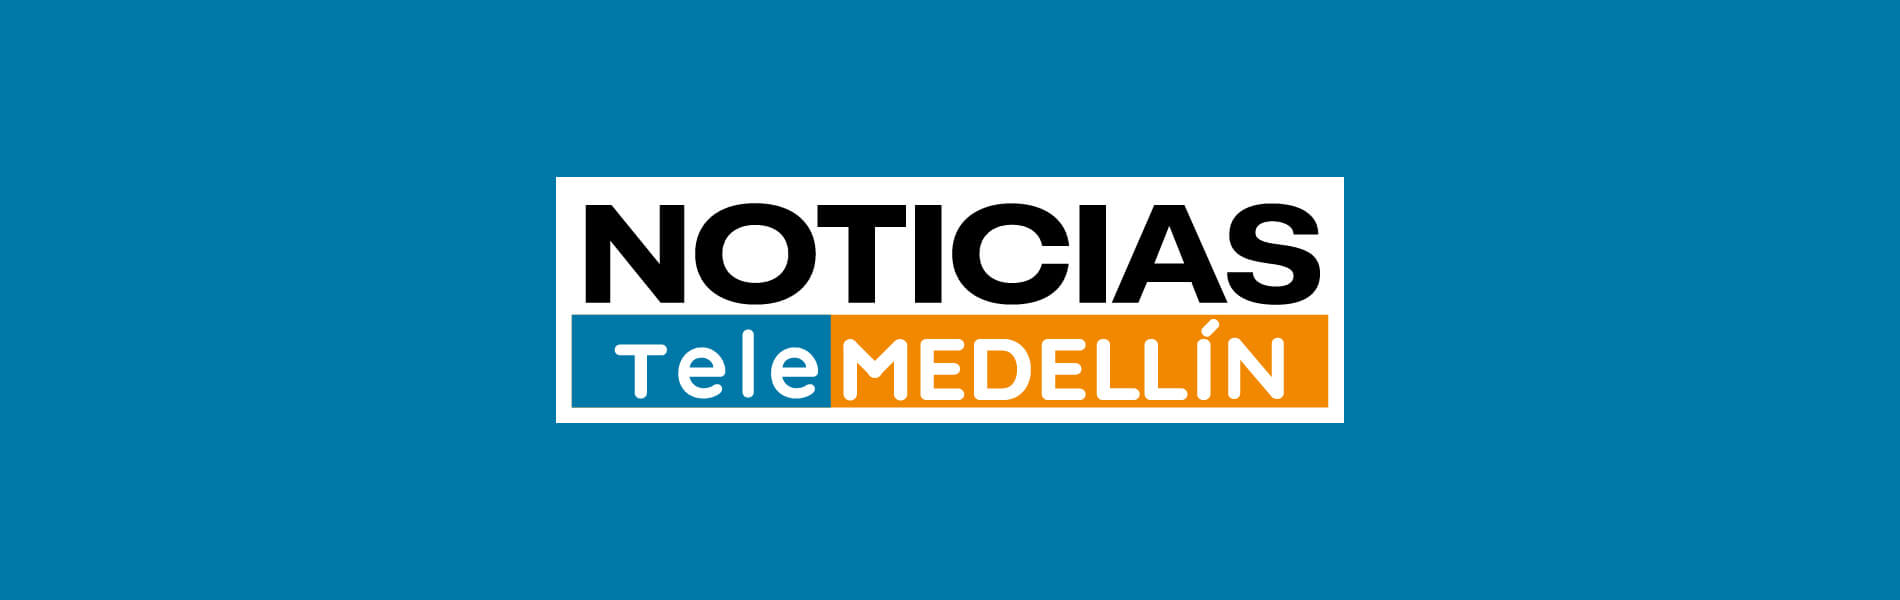 Banner Noticias Telemedellín